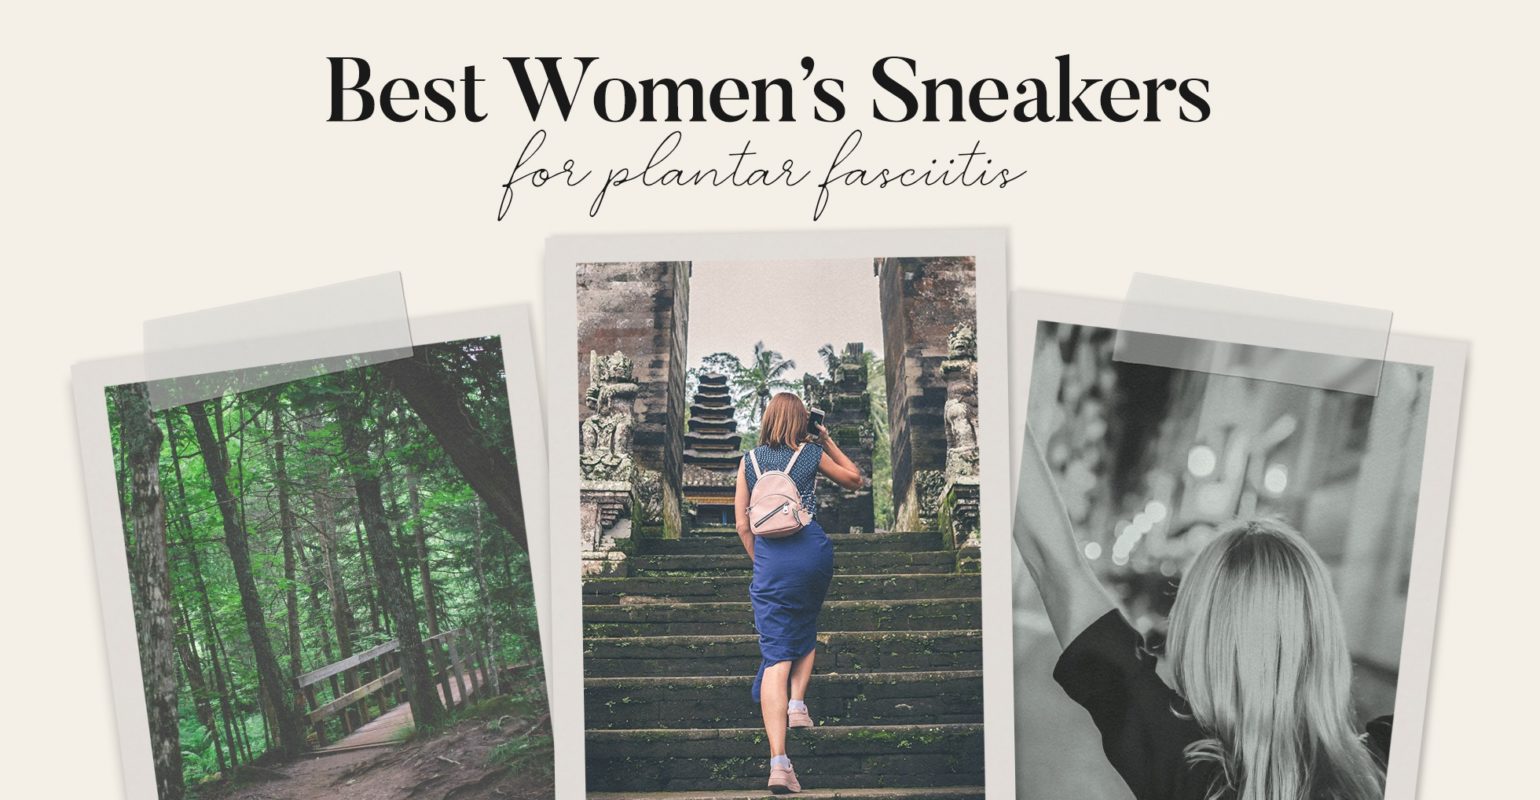 The Best Women’s Sneakers for Plantar Fasciitis